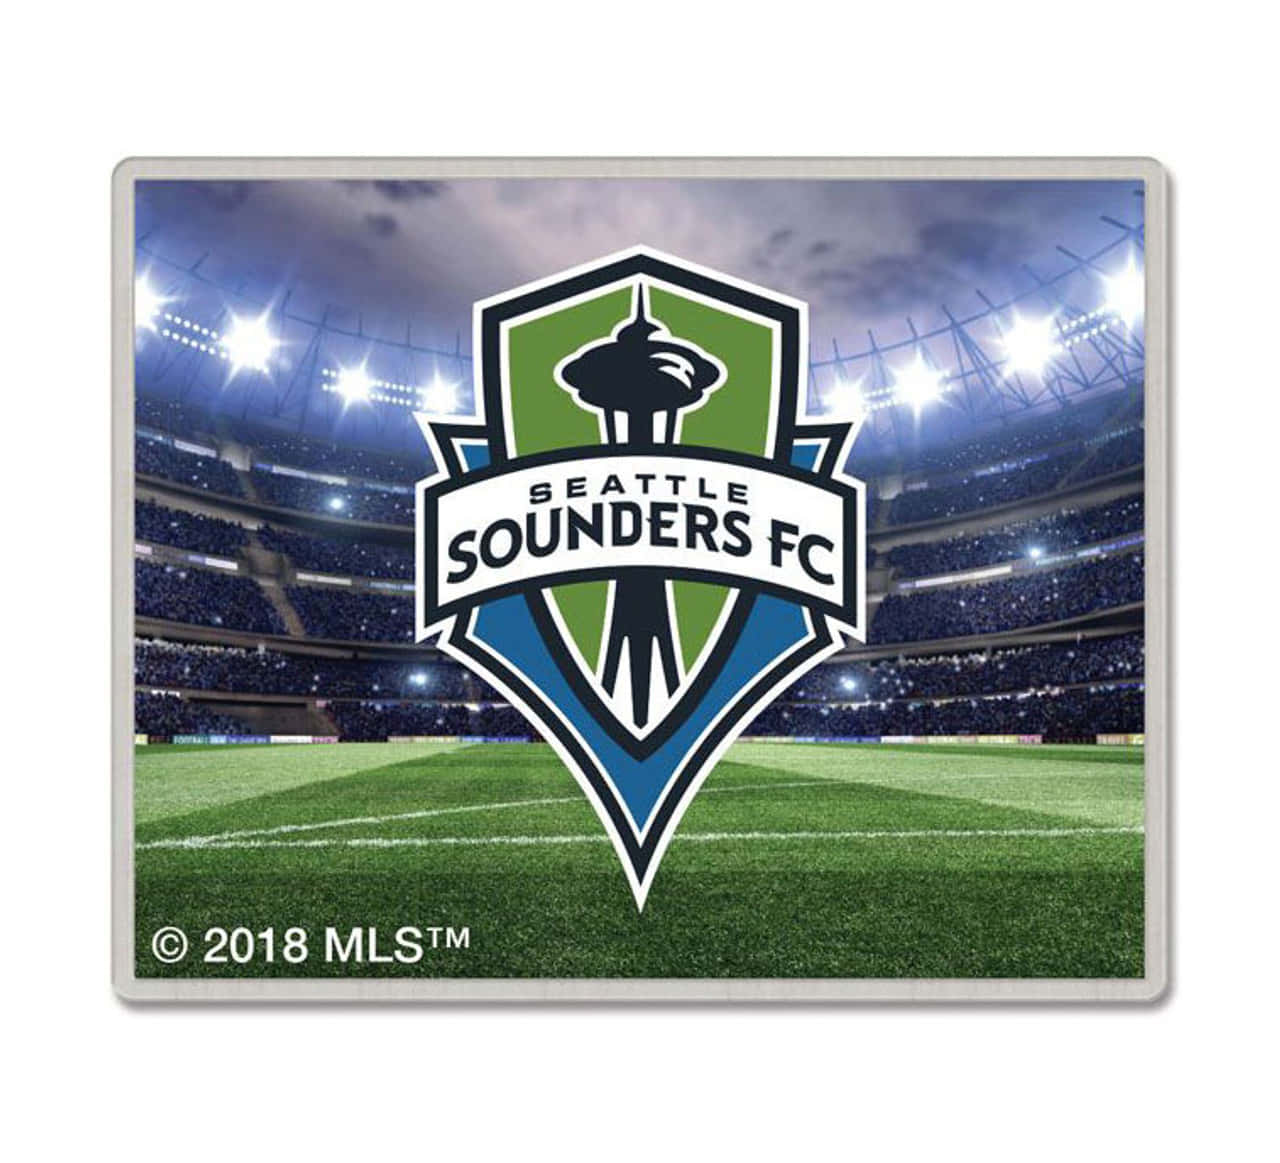 Seattlesounders Fc Professionell Fotbollsklubb. Wallpaper